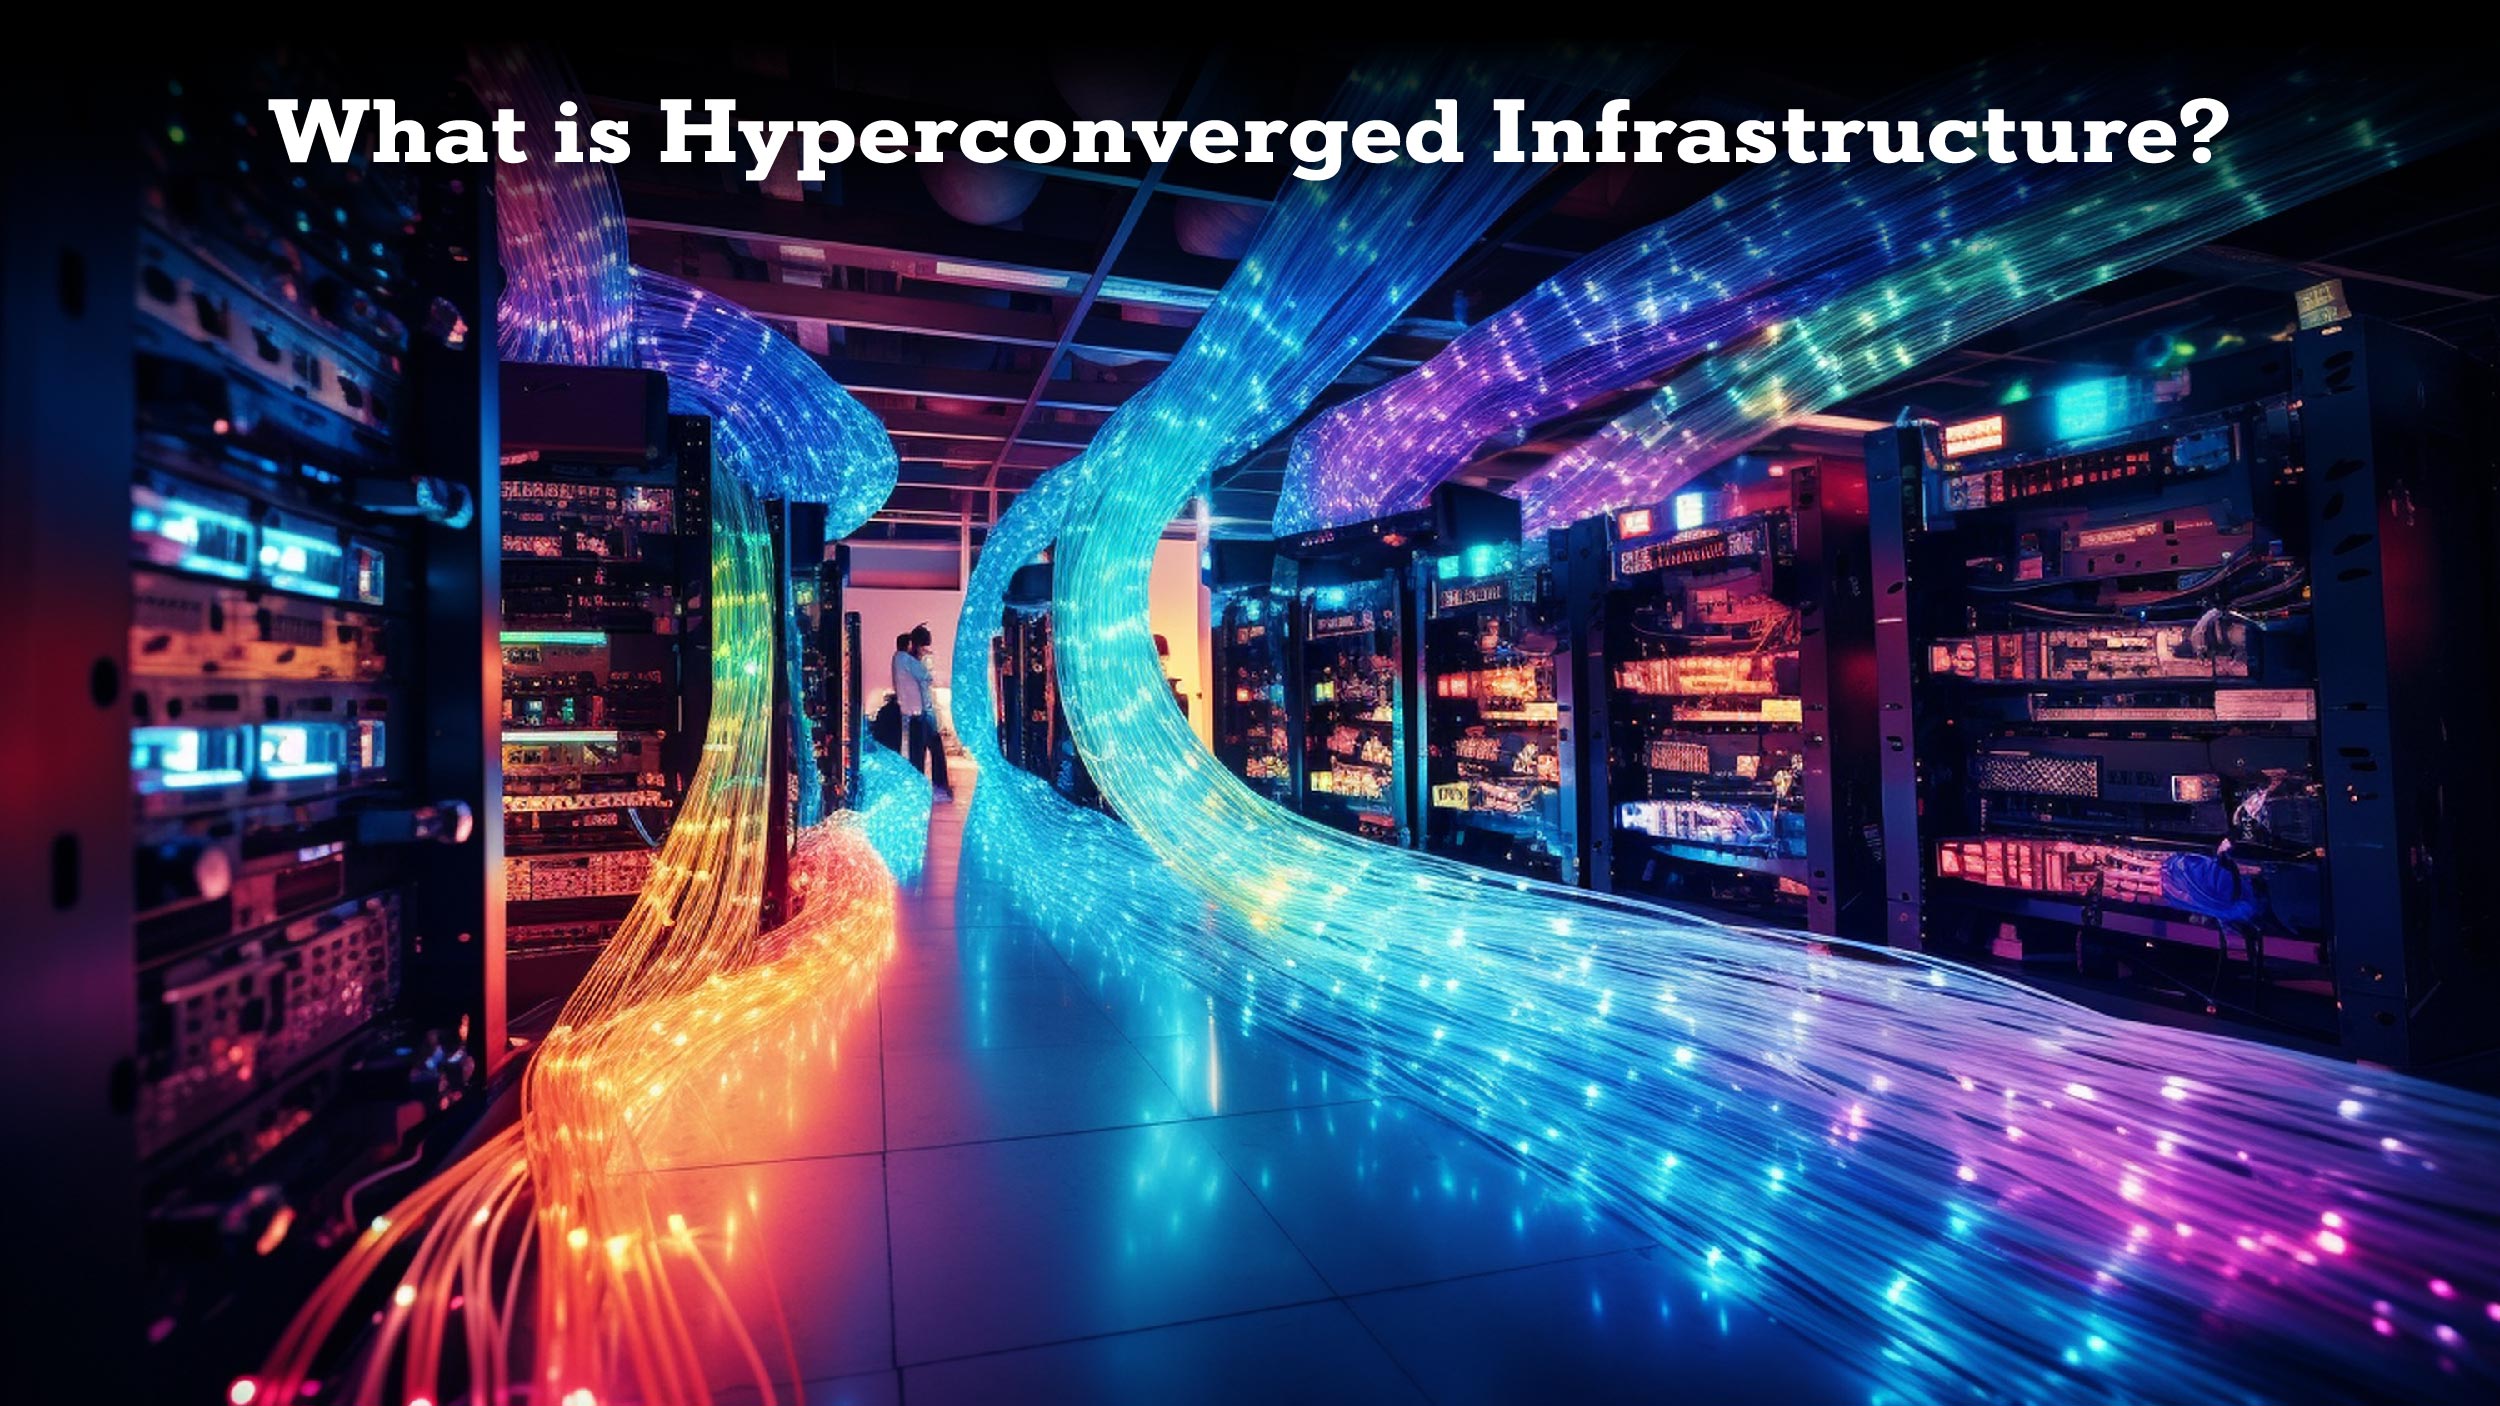 Hyperconverged Infrastructure